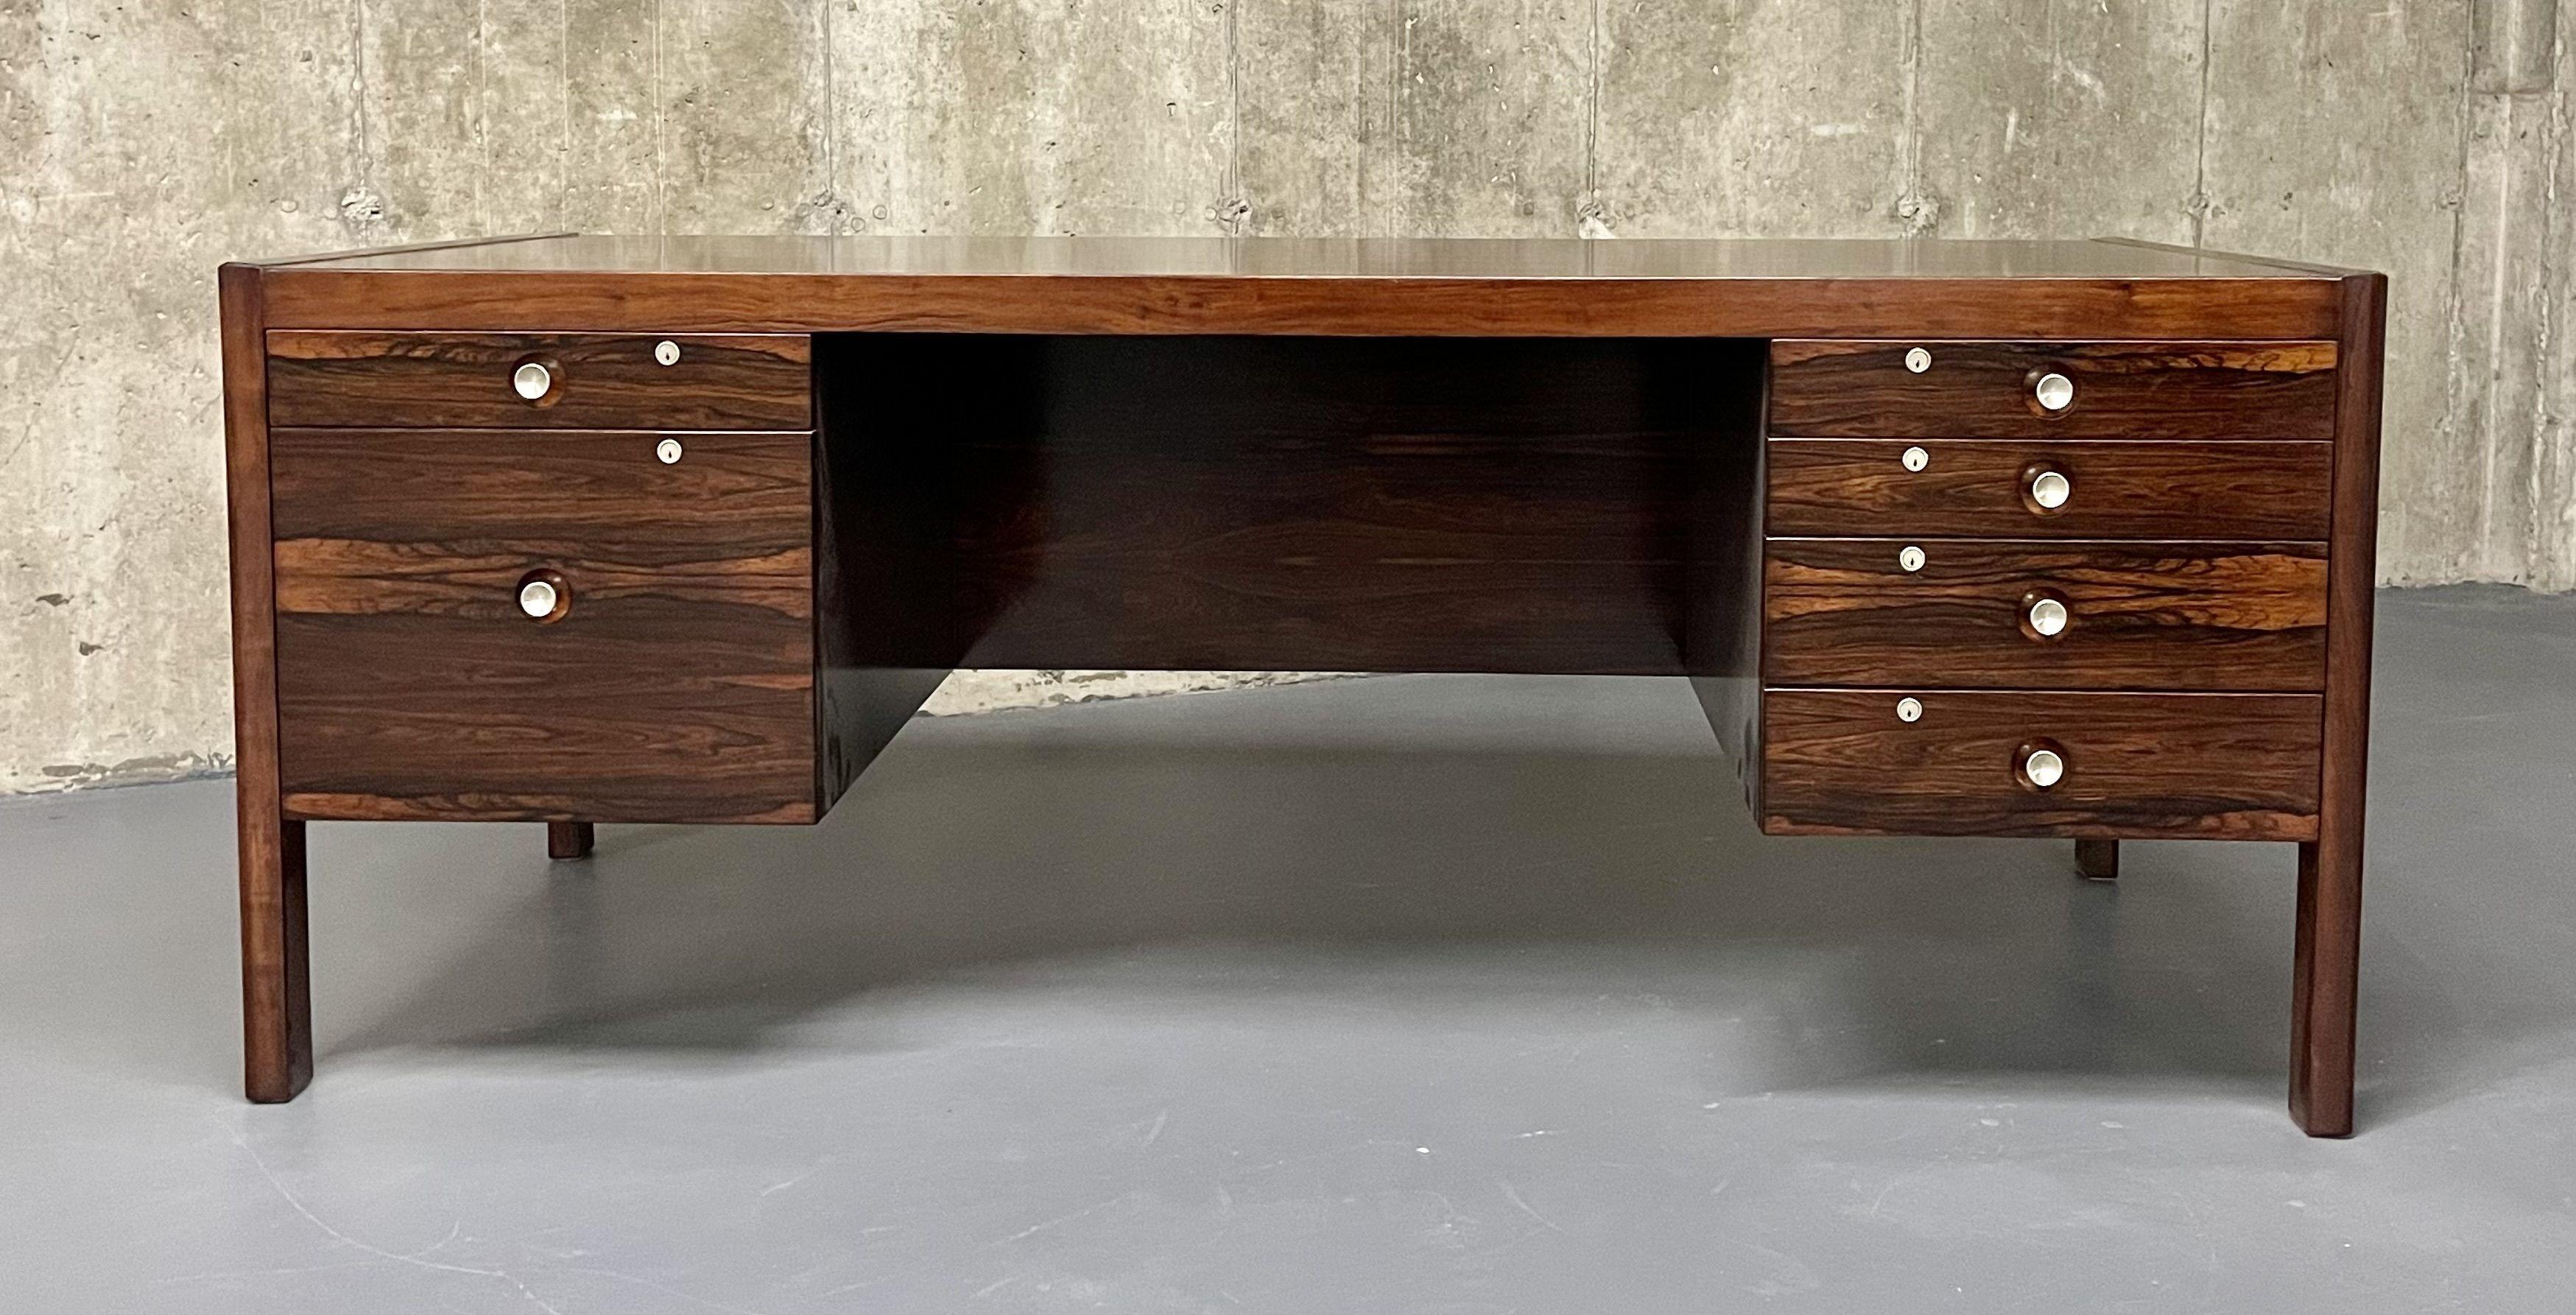 20th Century Mid-Century Modern Rosewood Desk, Finn Juhl Style, Refinished, Danish